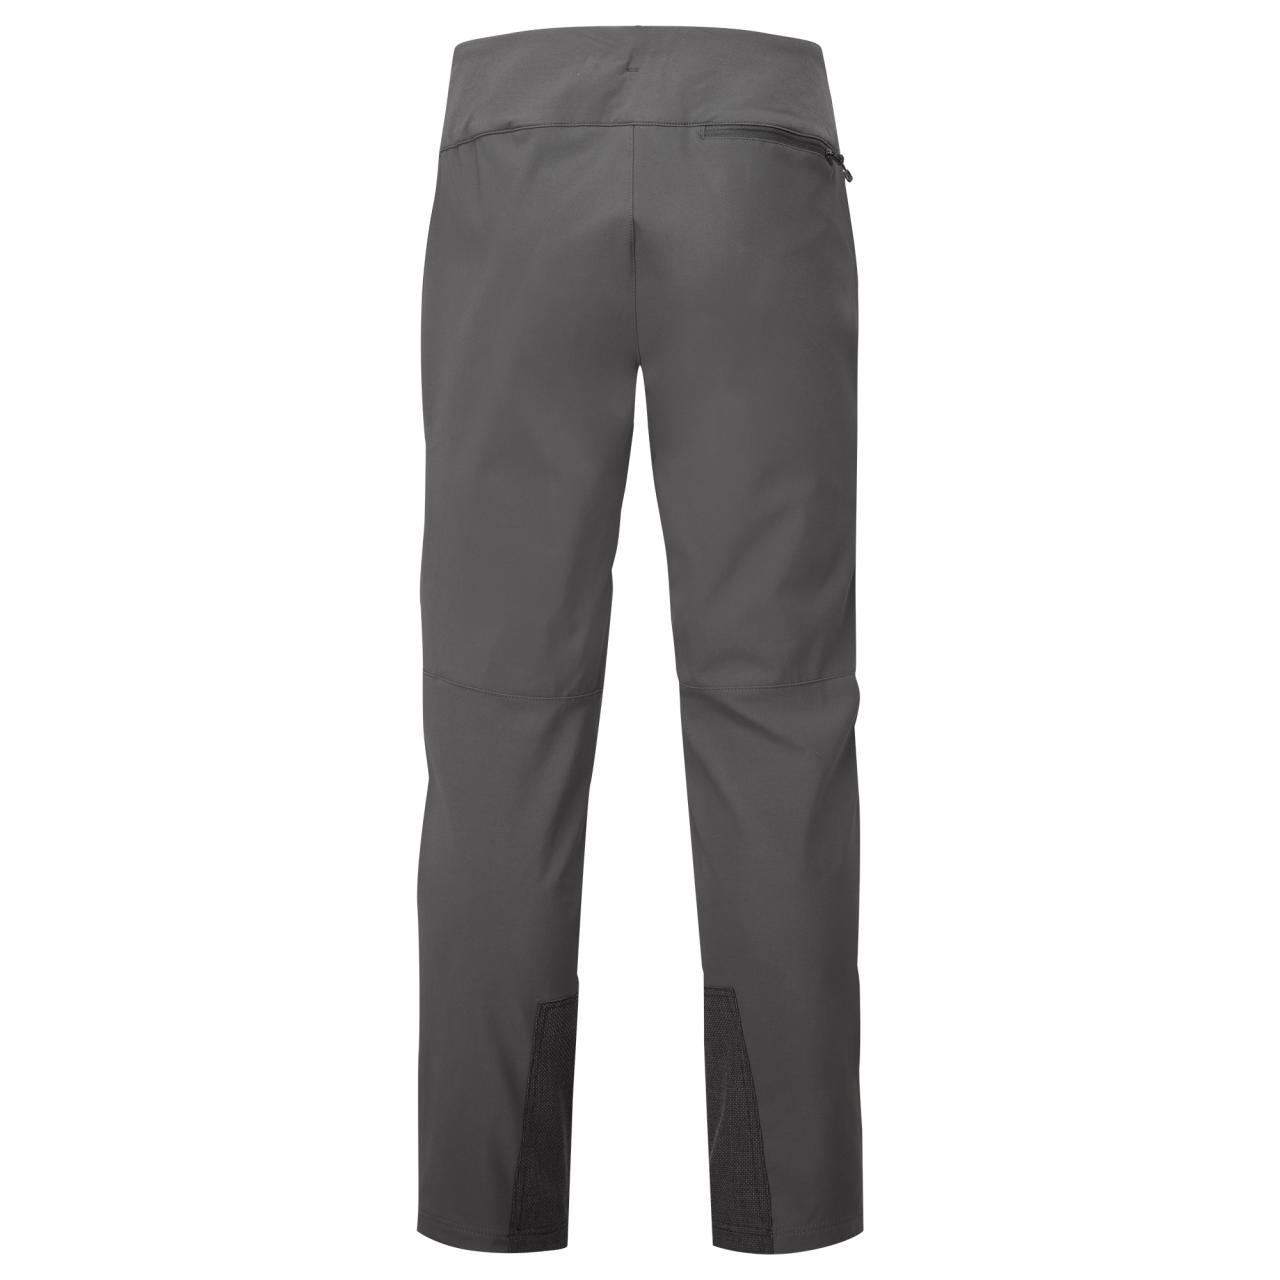 TENACITY XT PANTS LONG LEG-MIDNIGHT GREY-30/S Long pánské kalhoty tmavě šedé